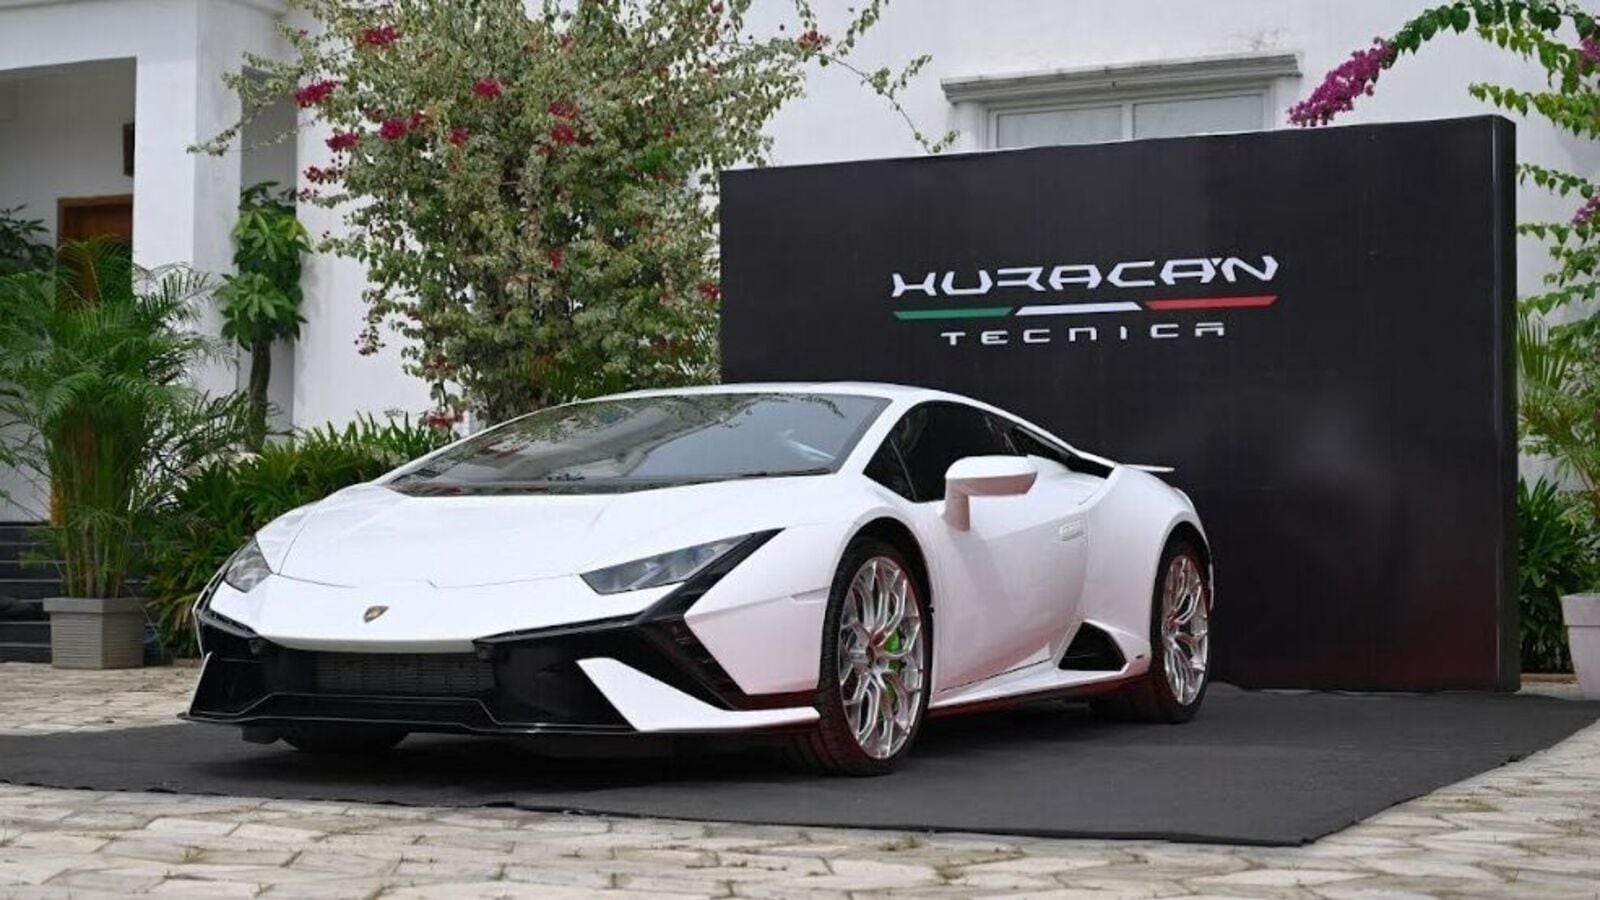 First unit of Lamborghini Huracan Tecnica, worth ₹4 crore